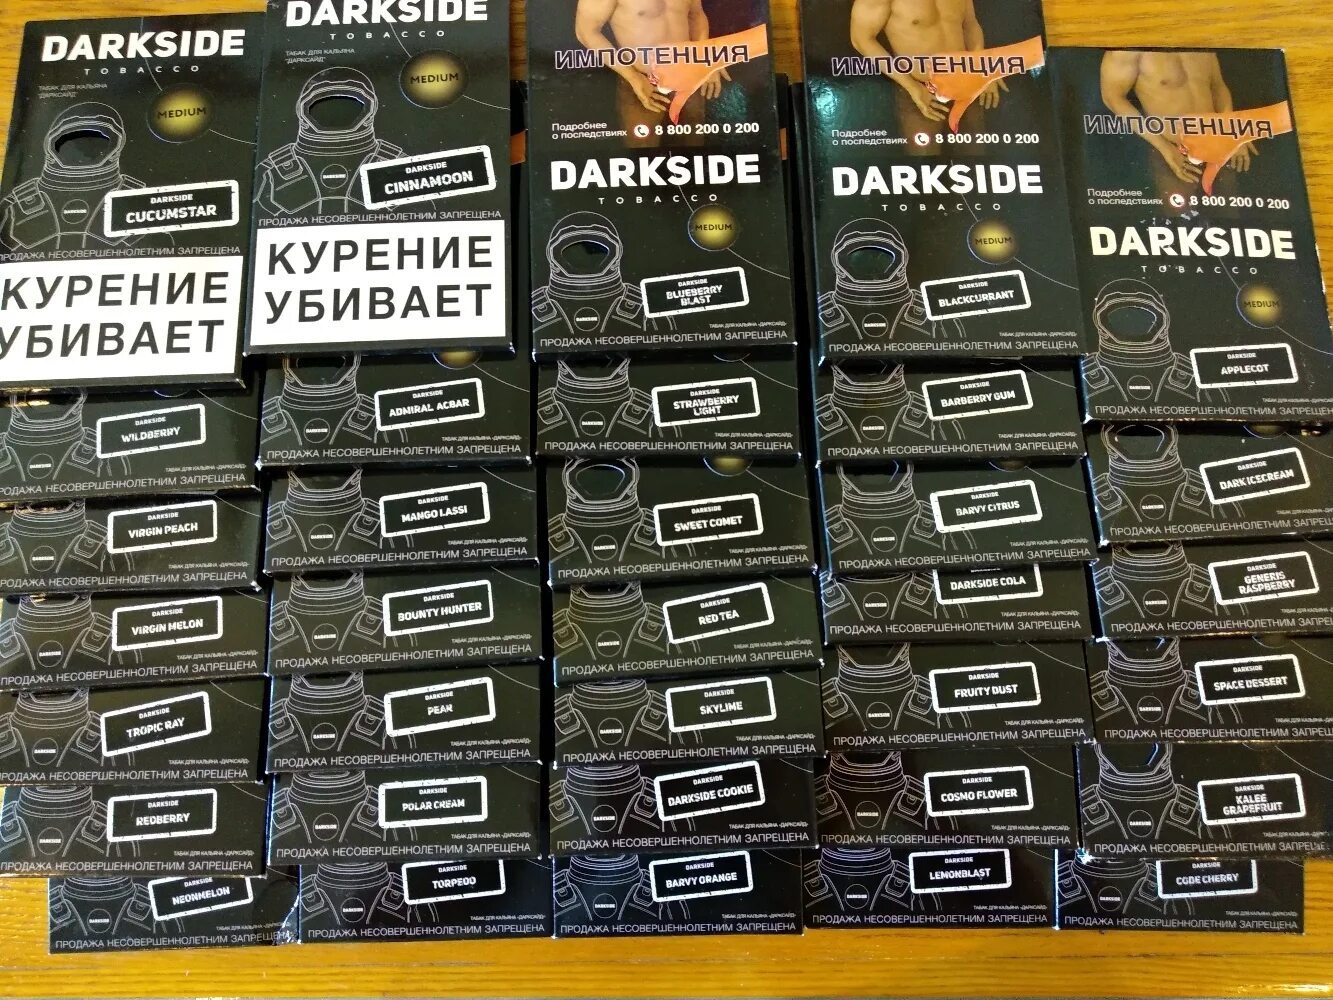 Dark Side табак вкусы список. Дарксайд вкусы список. Darkside табак для кальяна линейки. Dark Side линейка вкусов.